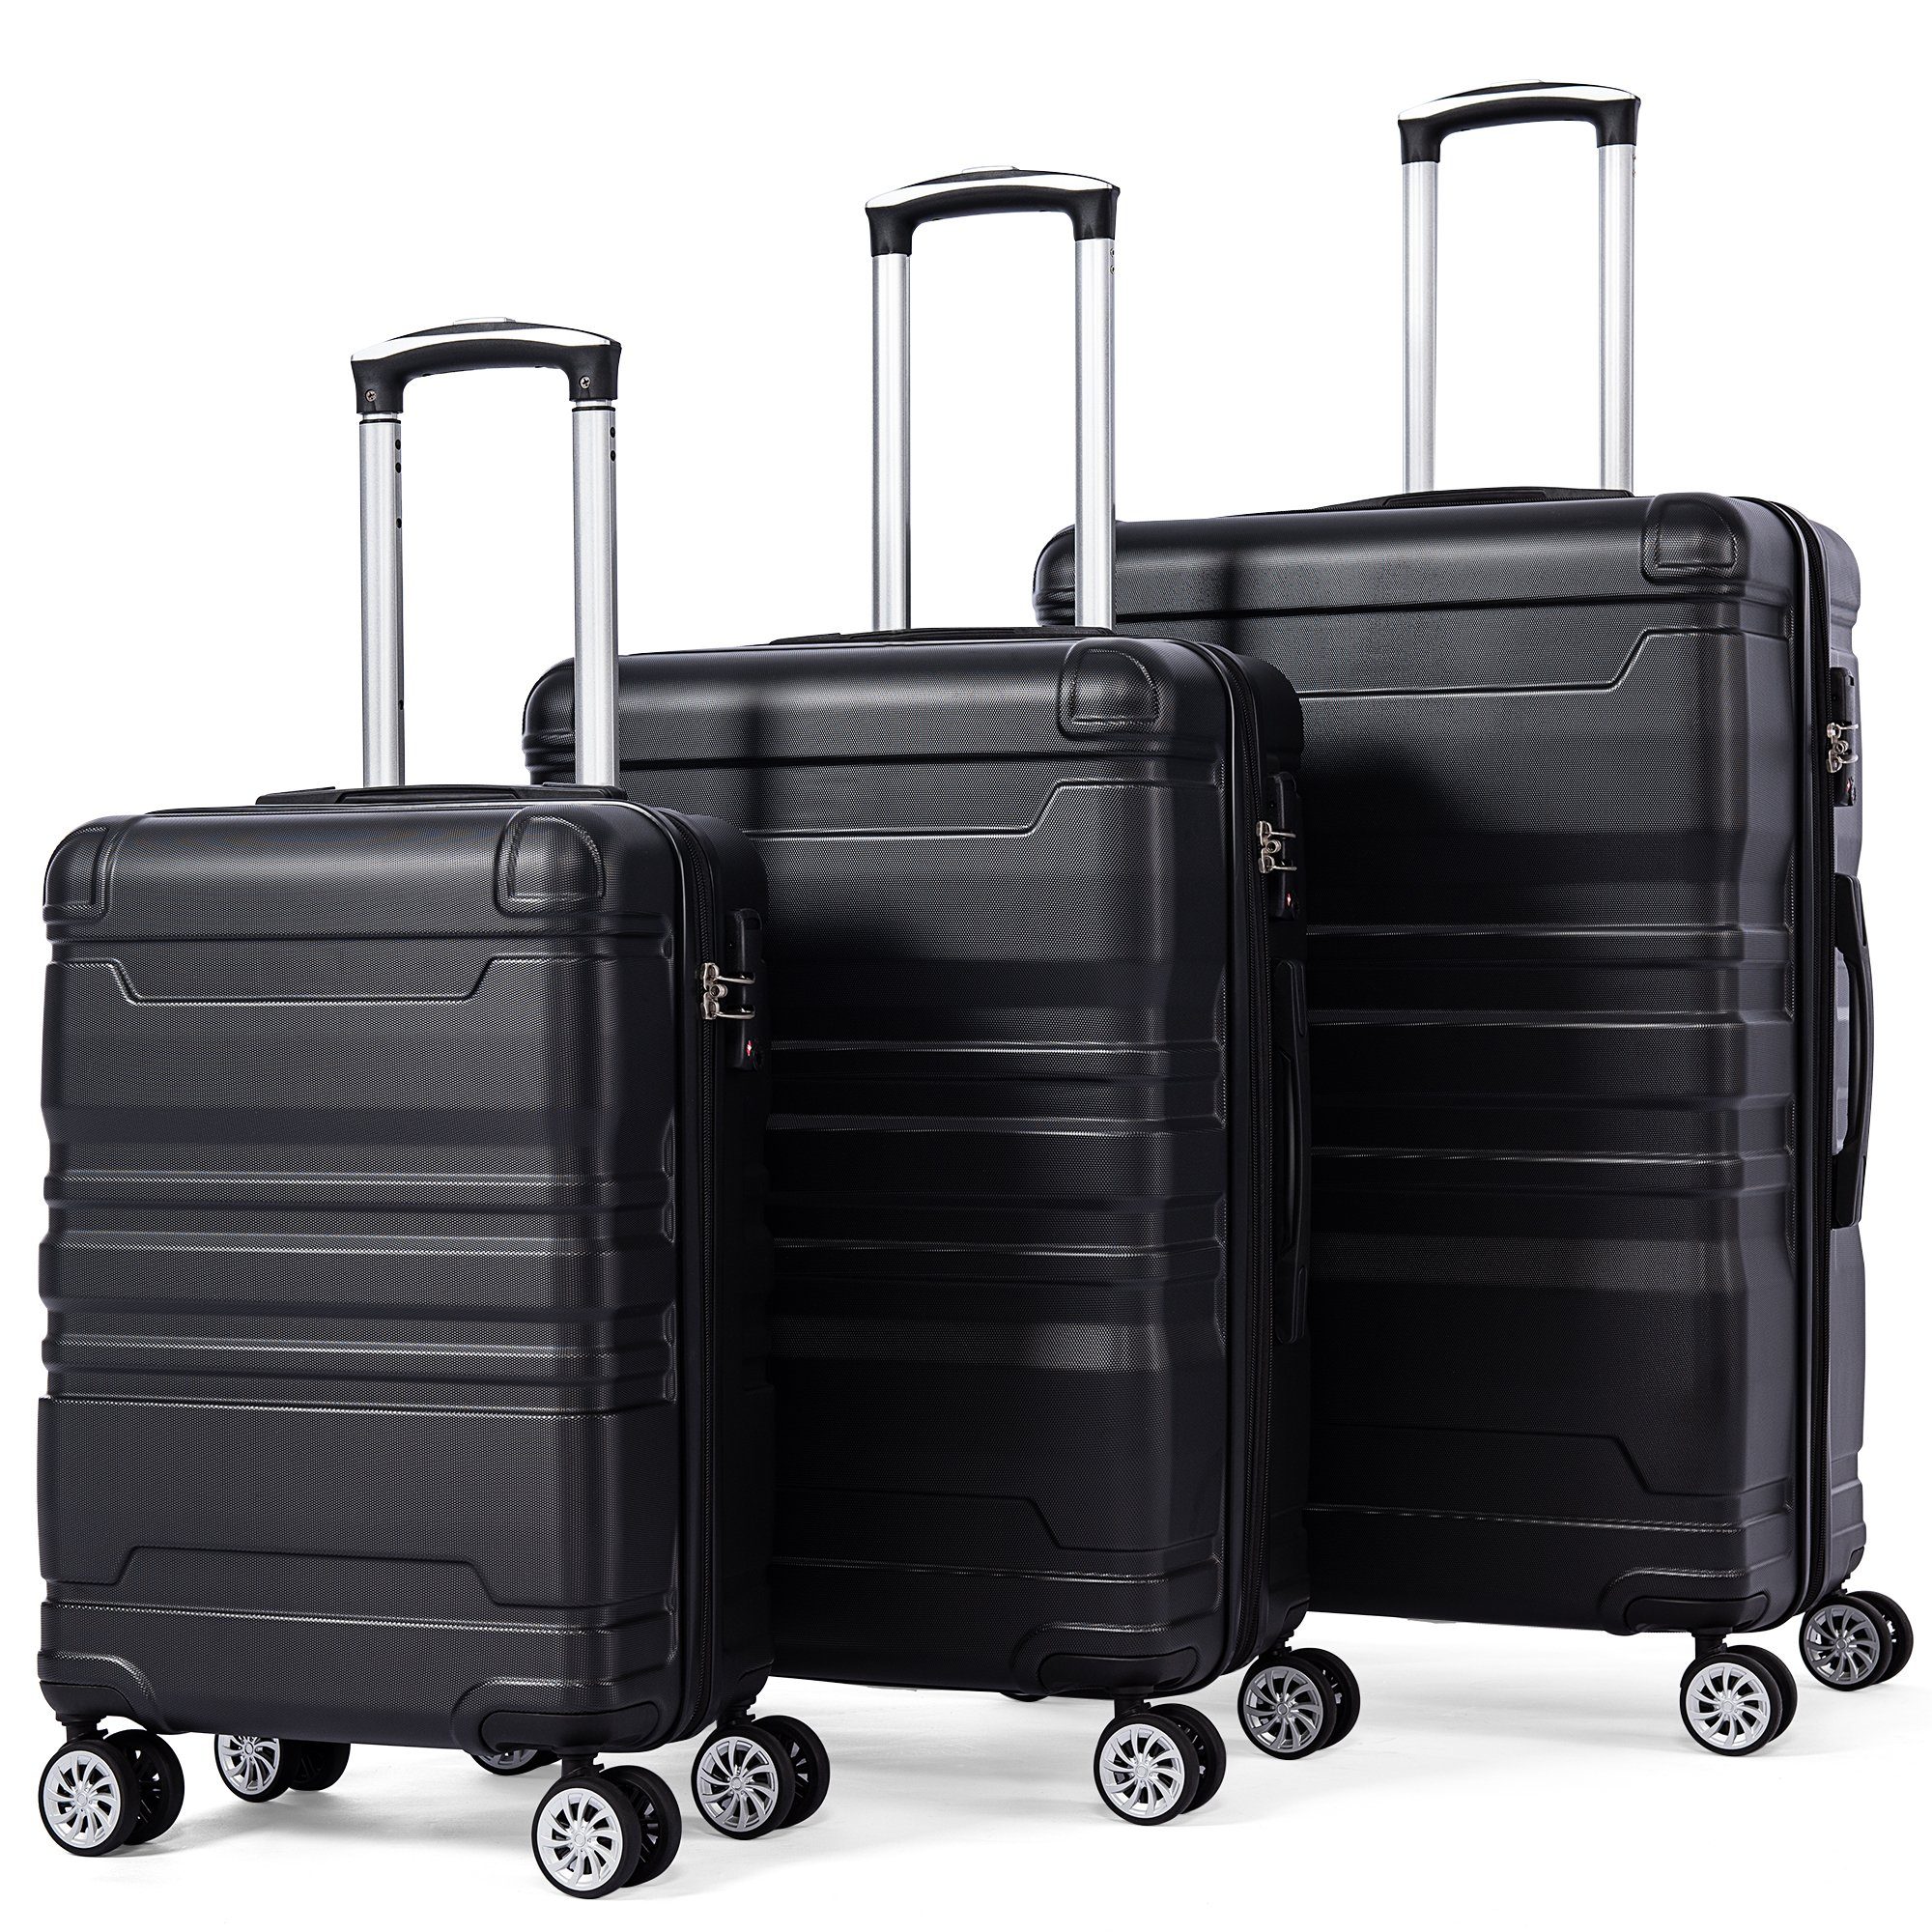 Ulife Kofferset schwarz, Hartschalen-Trolley, Aufgabegepäck, 4 Rollen, (3 teilig, 3 tlg), 360° Rollen, TSA Zahlenschloss, 3-teiliger verstellbarer Griff